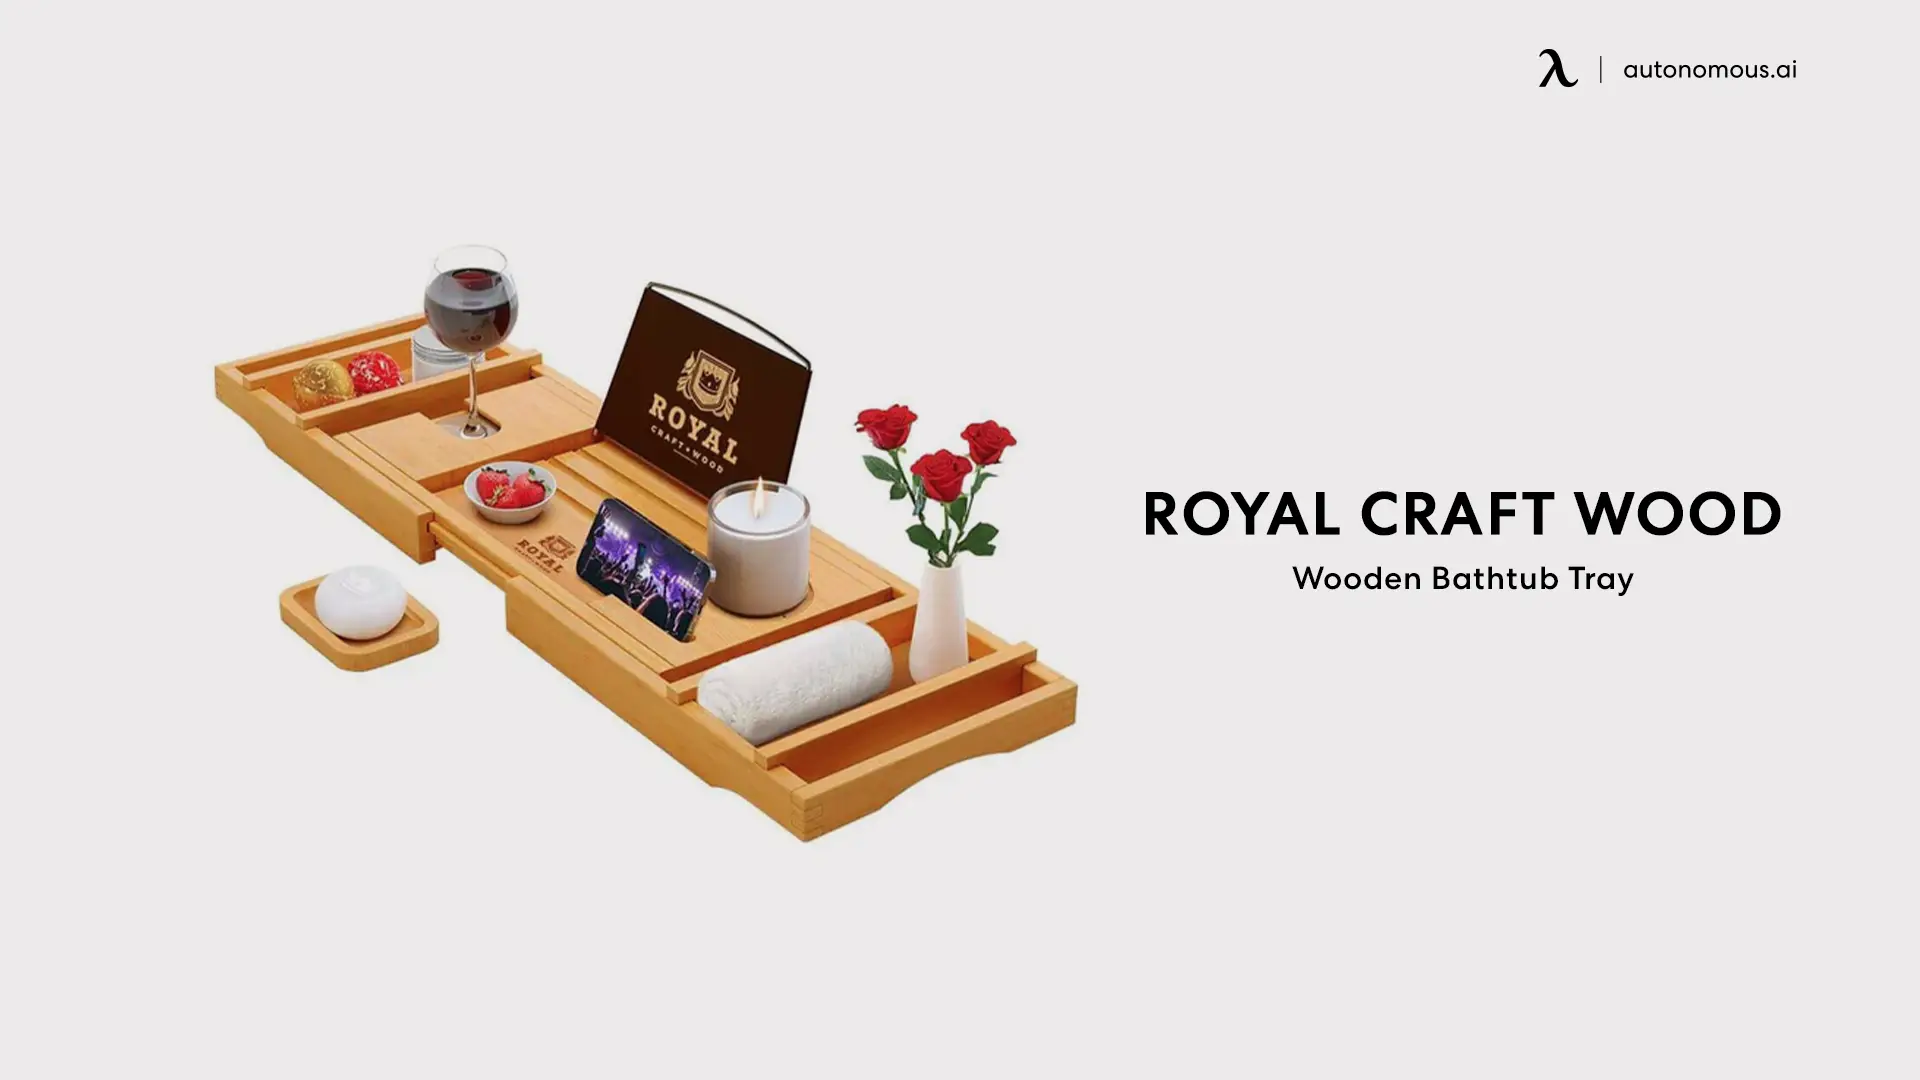 Royal Craft Wood Store Wooden Bathtub Tray